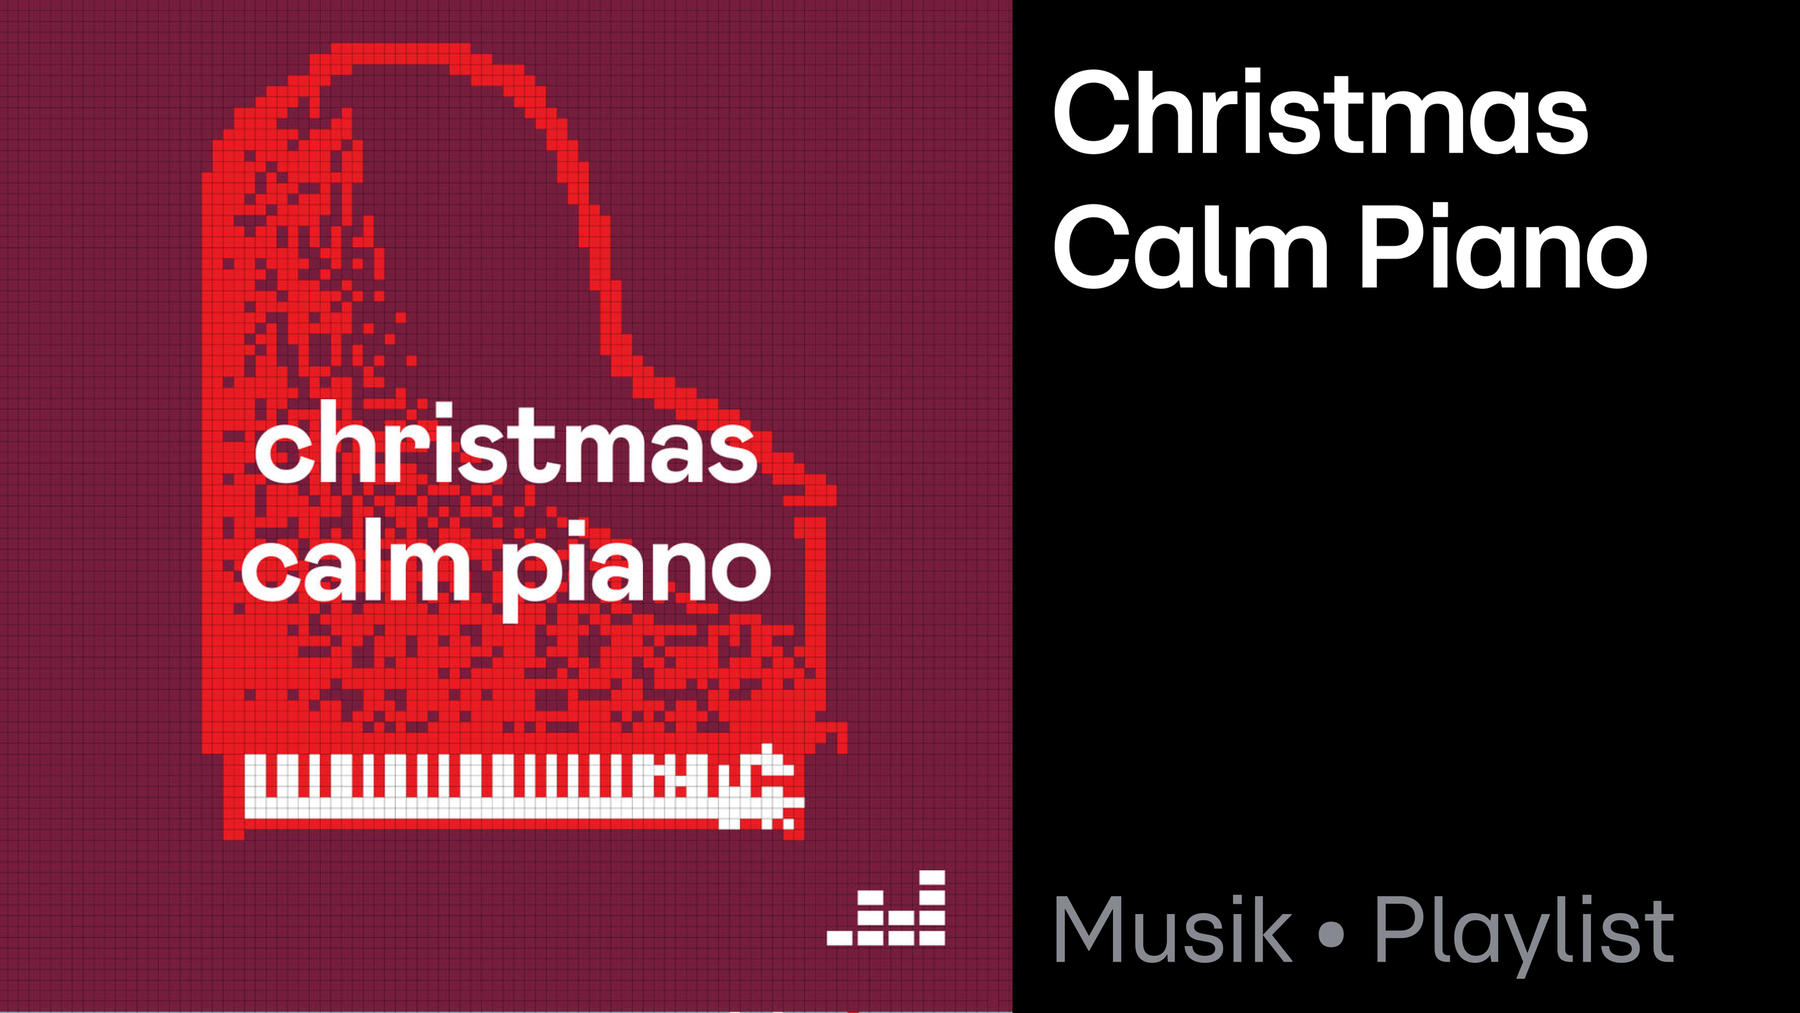 Playlist: Christmas Calm Piano